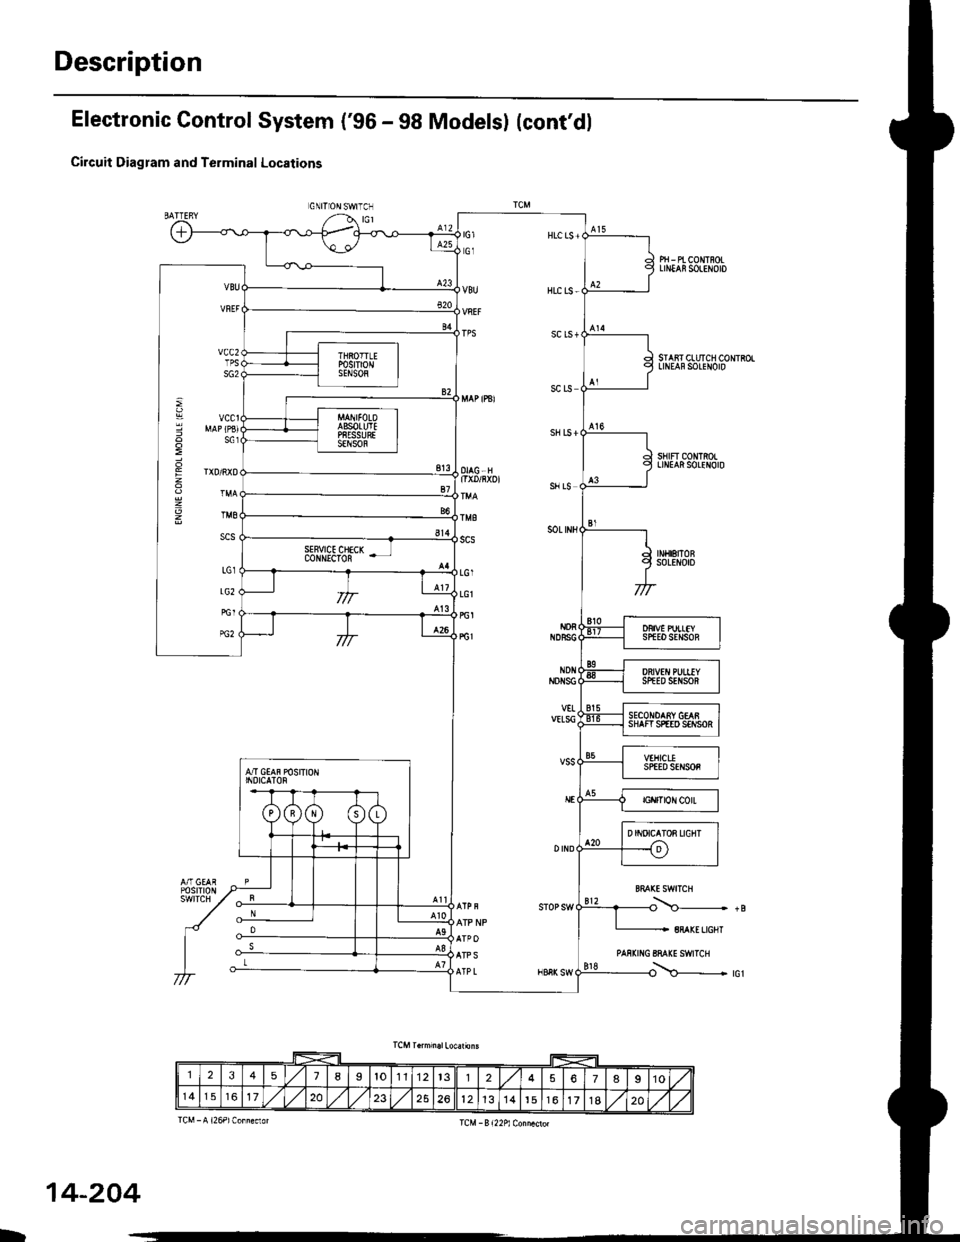 HONDA CIVIC 2000 6.G Workshop Manual Description
Electronic Control System (gG - 98 Modelsl (contdl
Circuit Diagram and Terminal Locations
GNITIONSWITCN
Pri - Pt coNTnoLLrN ns0LtN0t0
SIAiT CLUTCH CONTSOLLINEAFSOLENOID
sHtFT CONmOILINIA